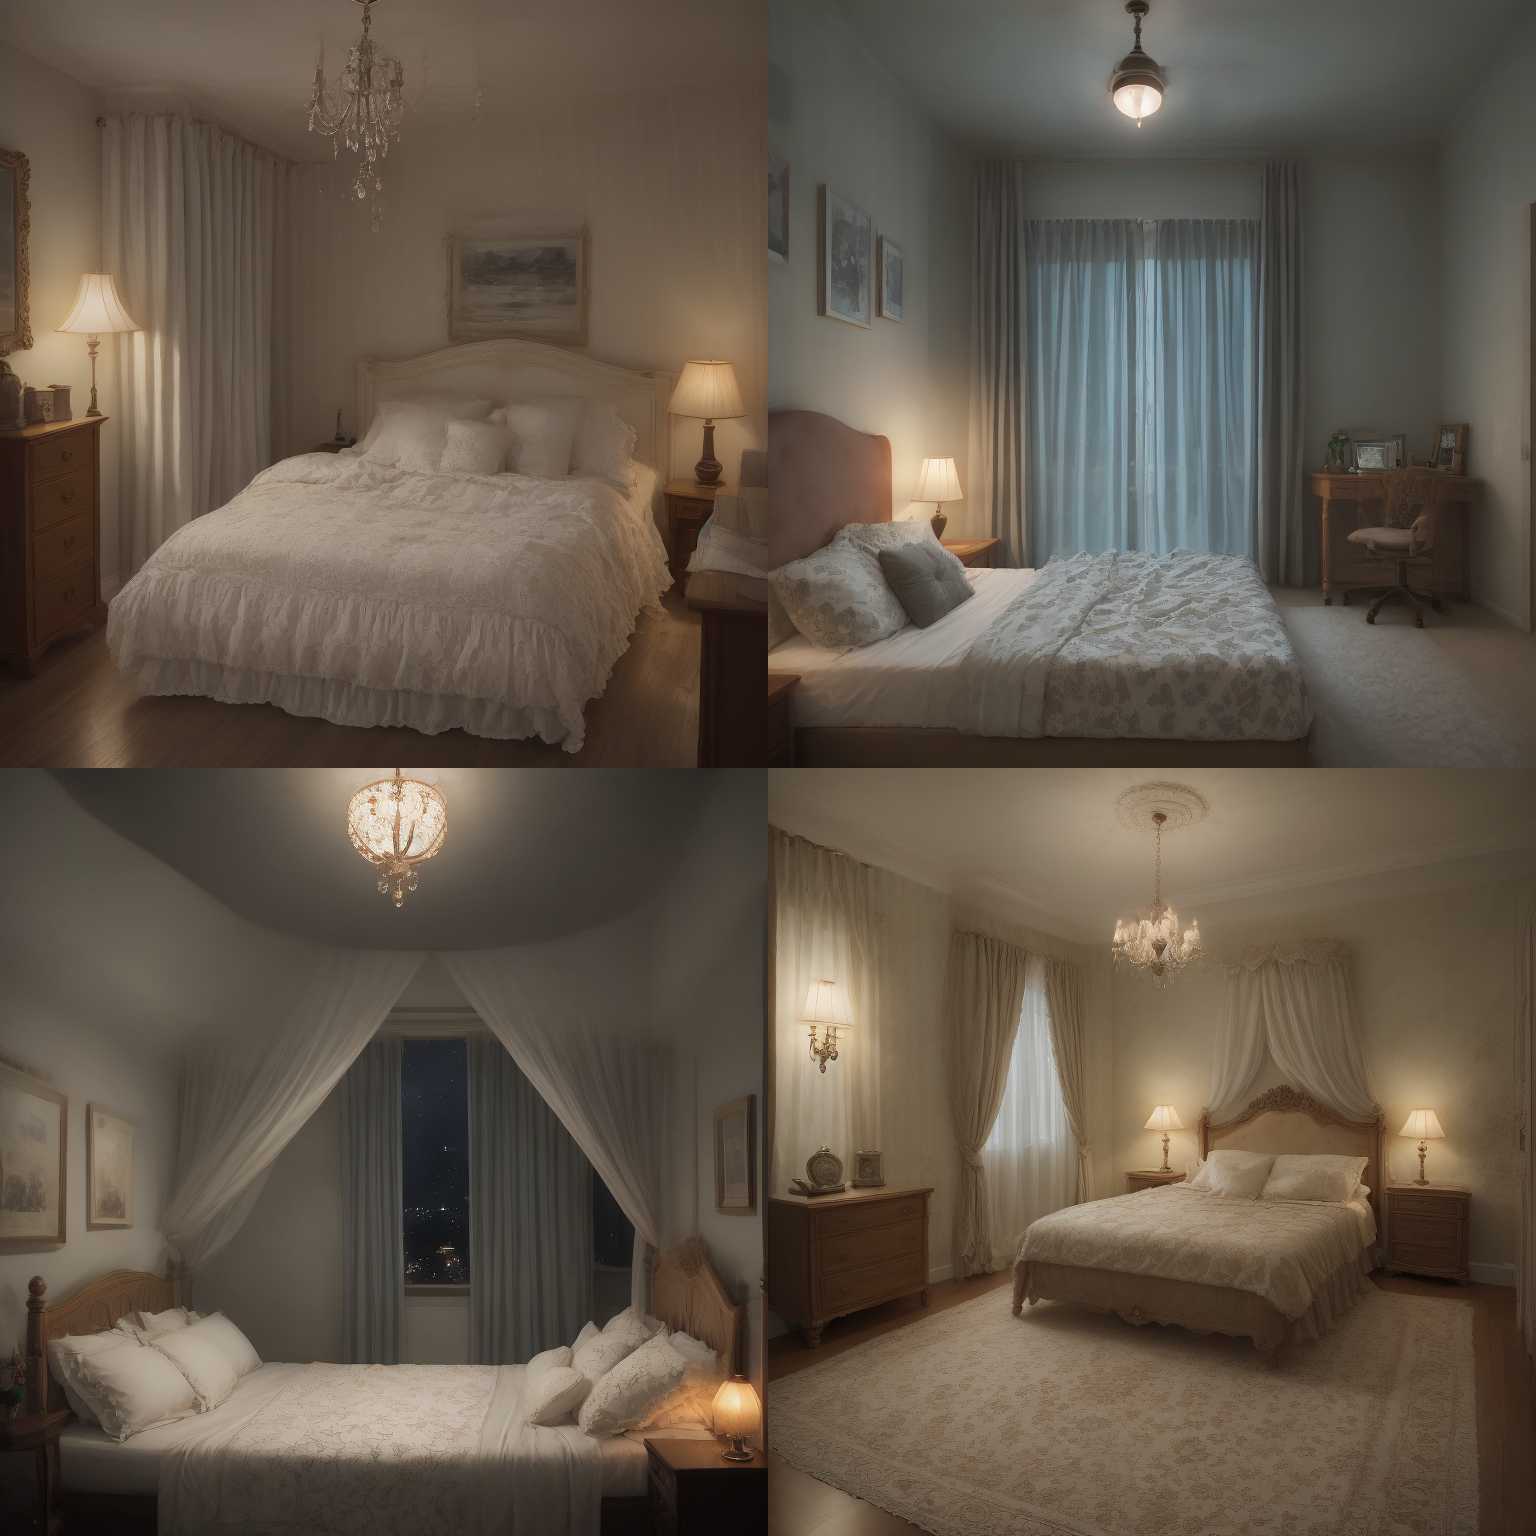 A bedroom at night